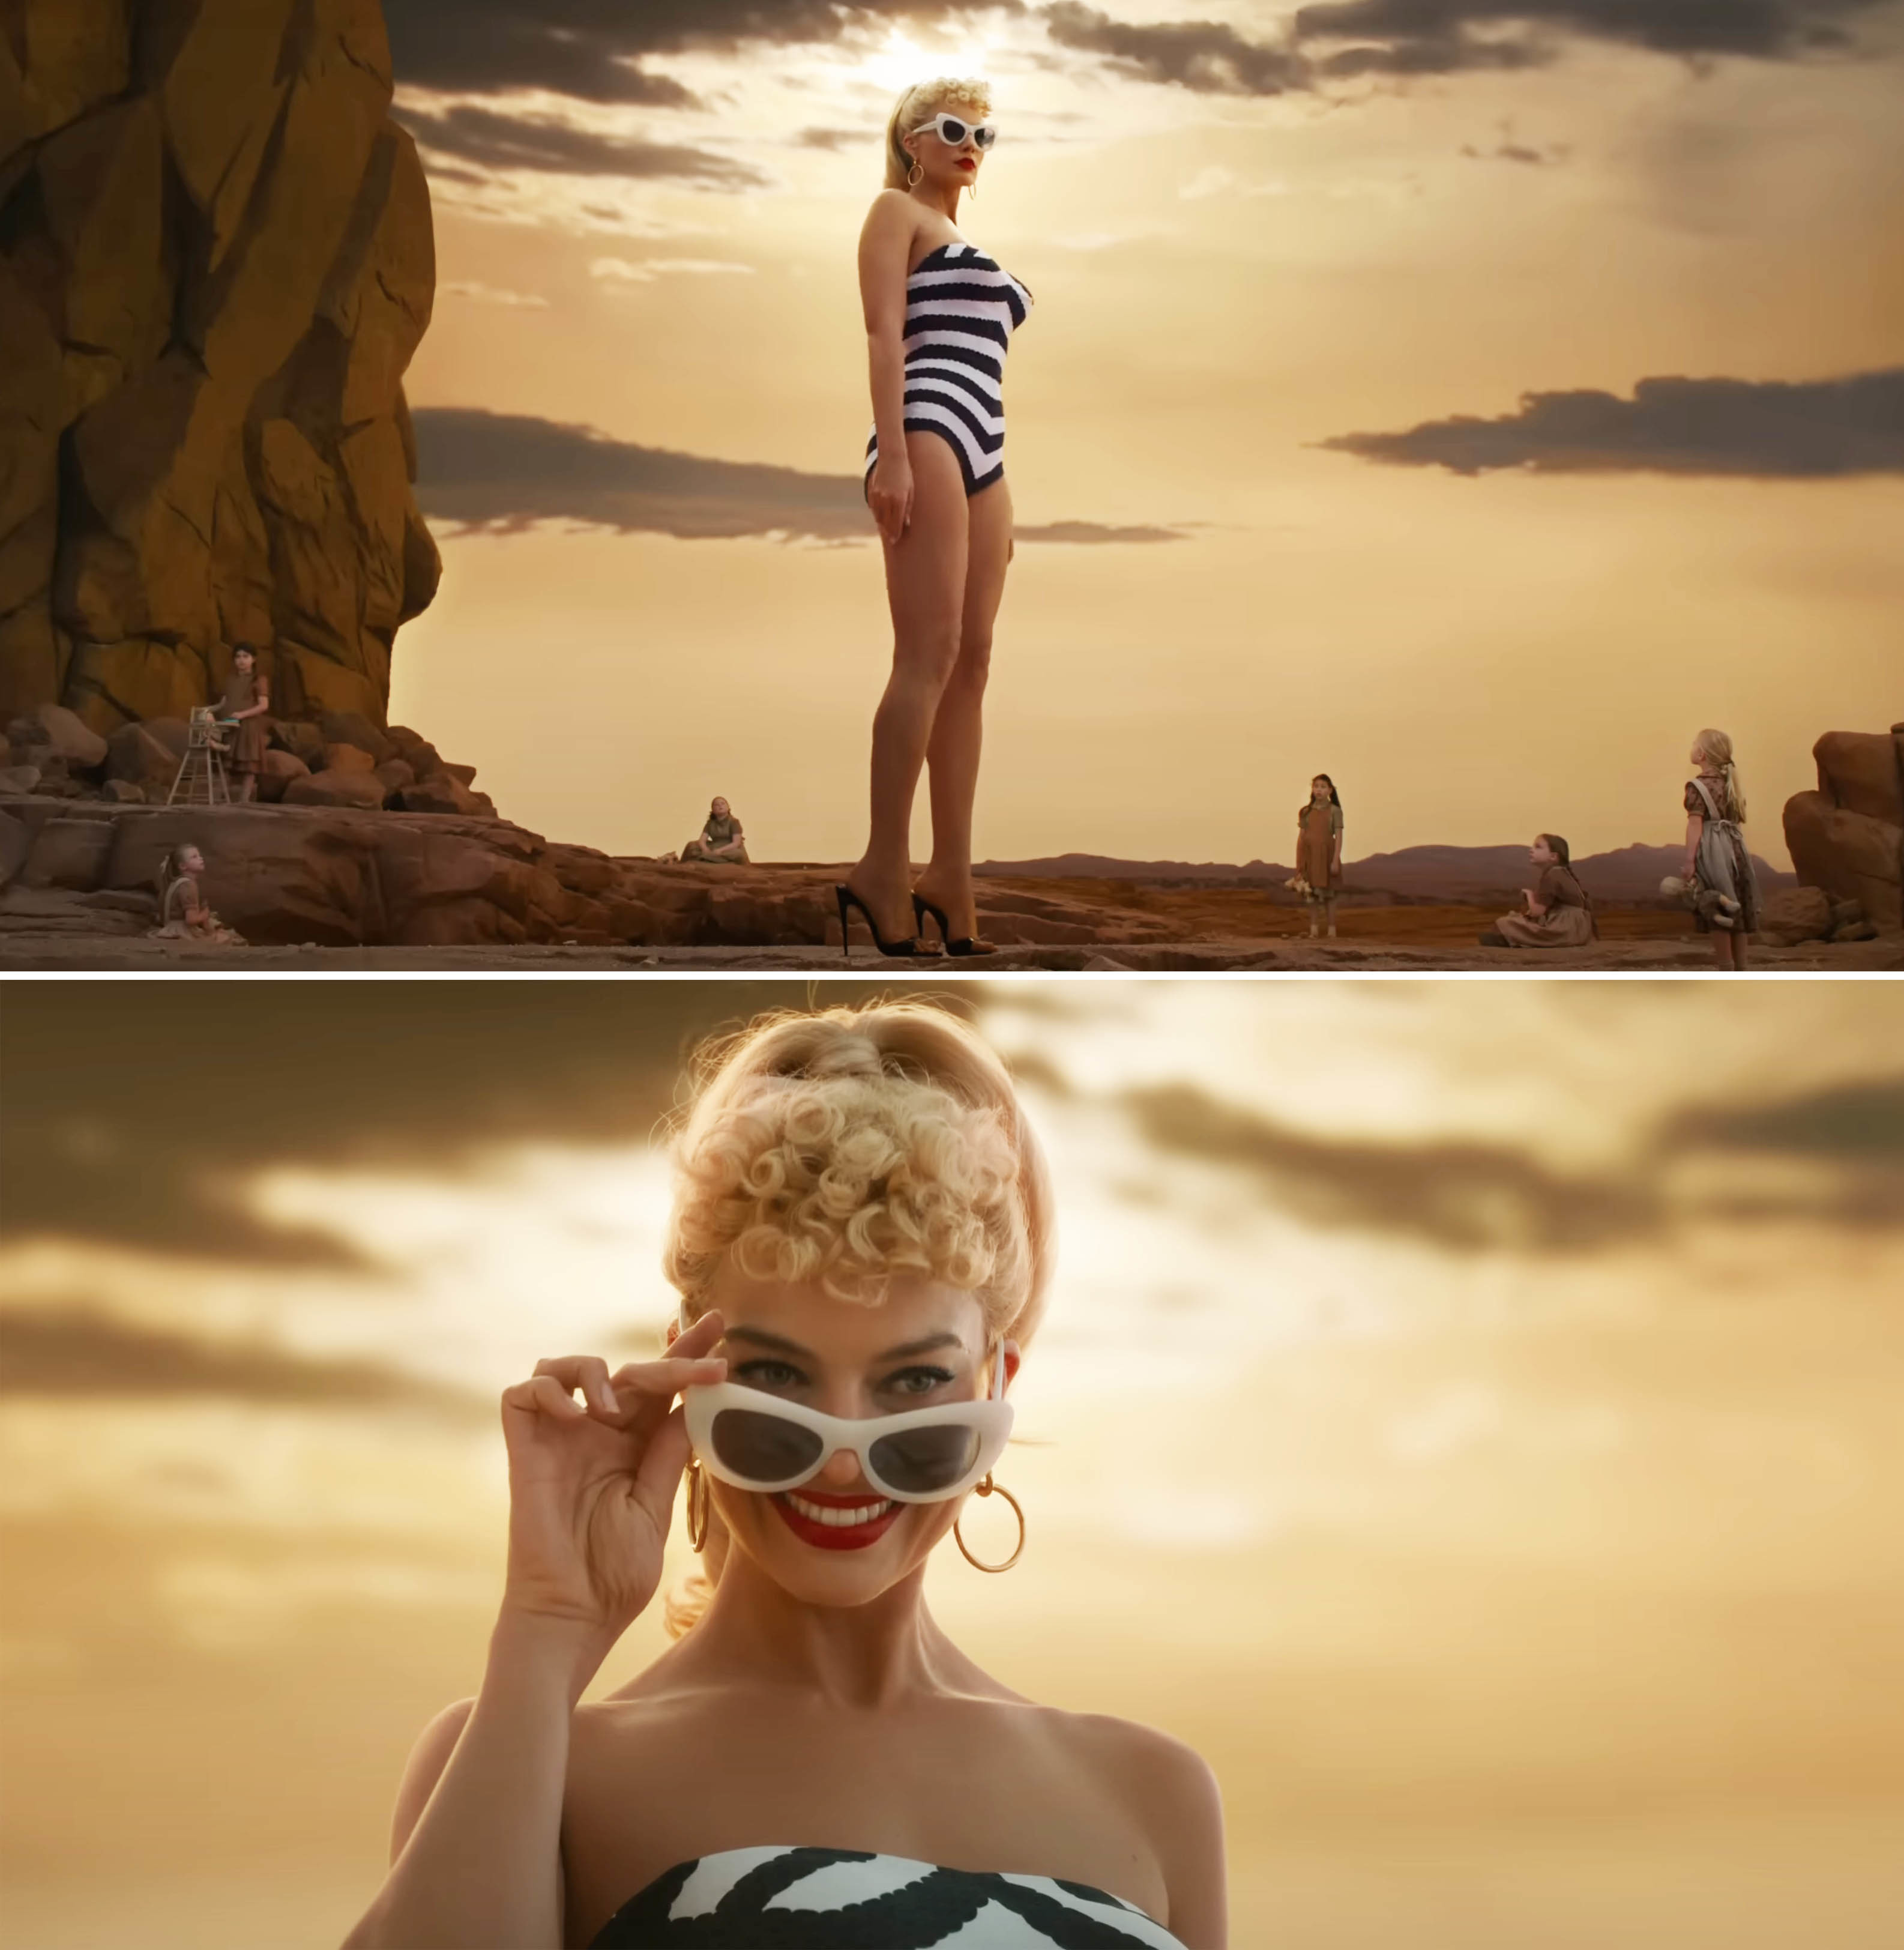 Margot Robbie Wore Yellow Chanel Promoting 'Barbie